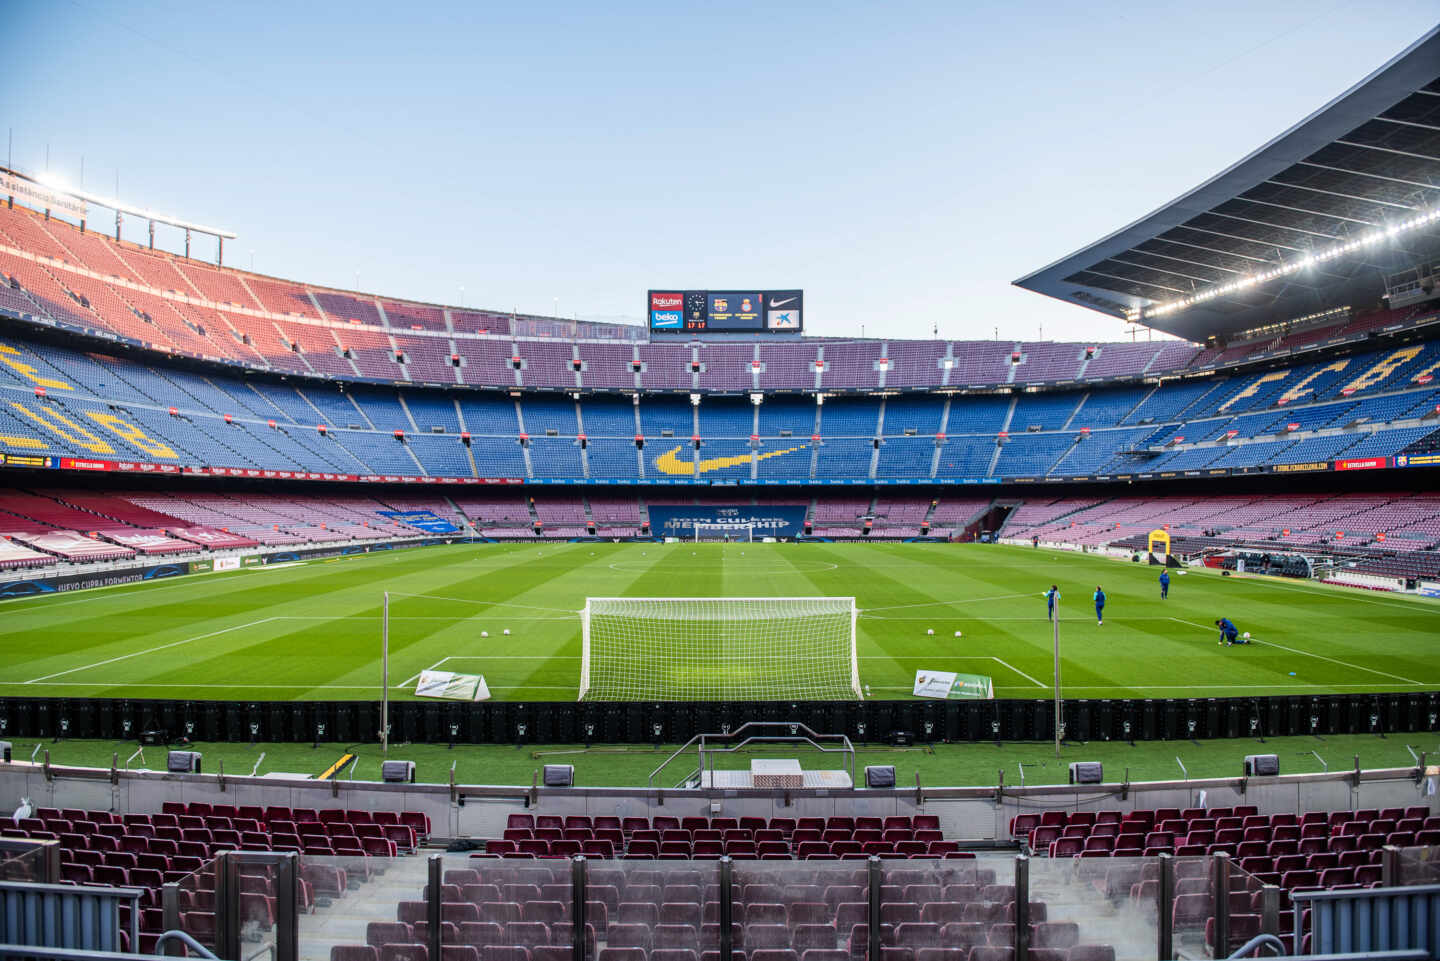 Камп нов. Стадион Барселоны. Камп ноу Бернабэу. Стадион Камп ноу снаружи. Новый Камп ноу.